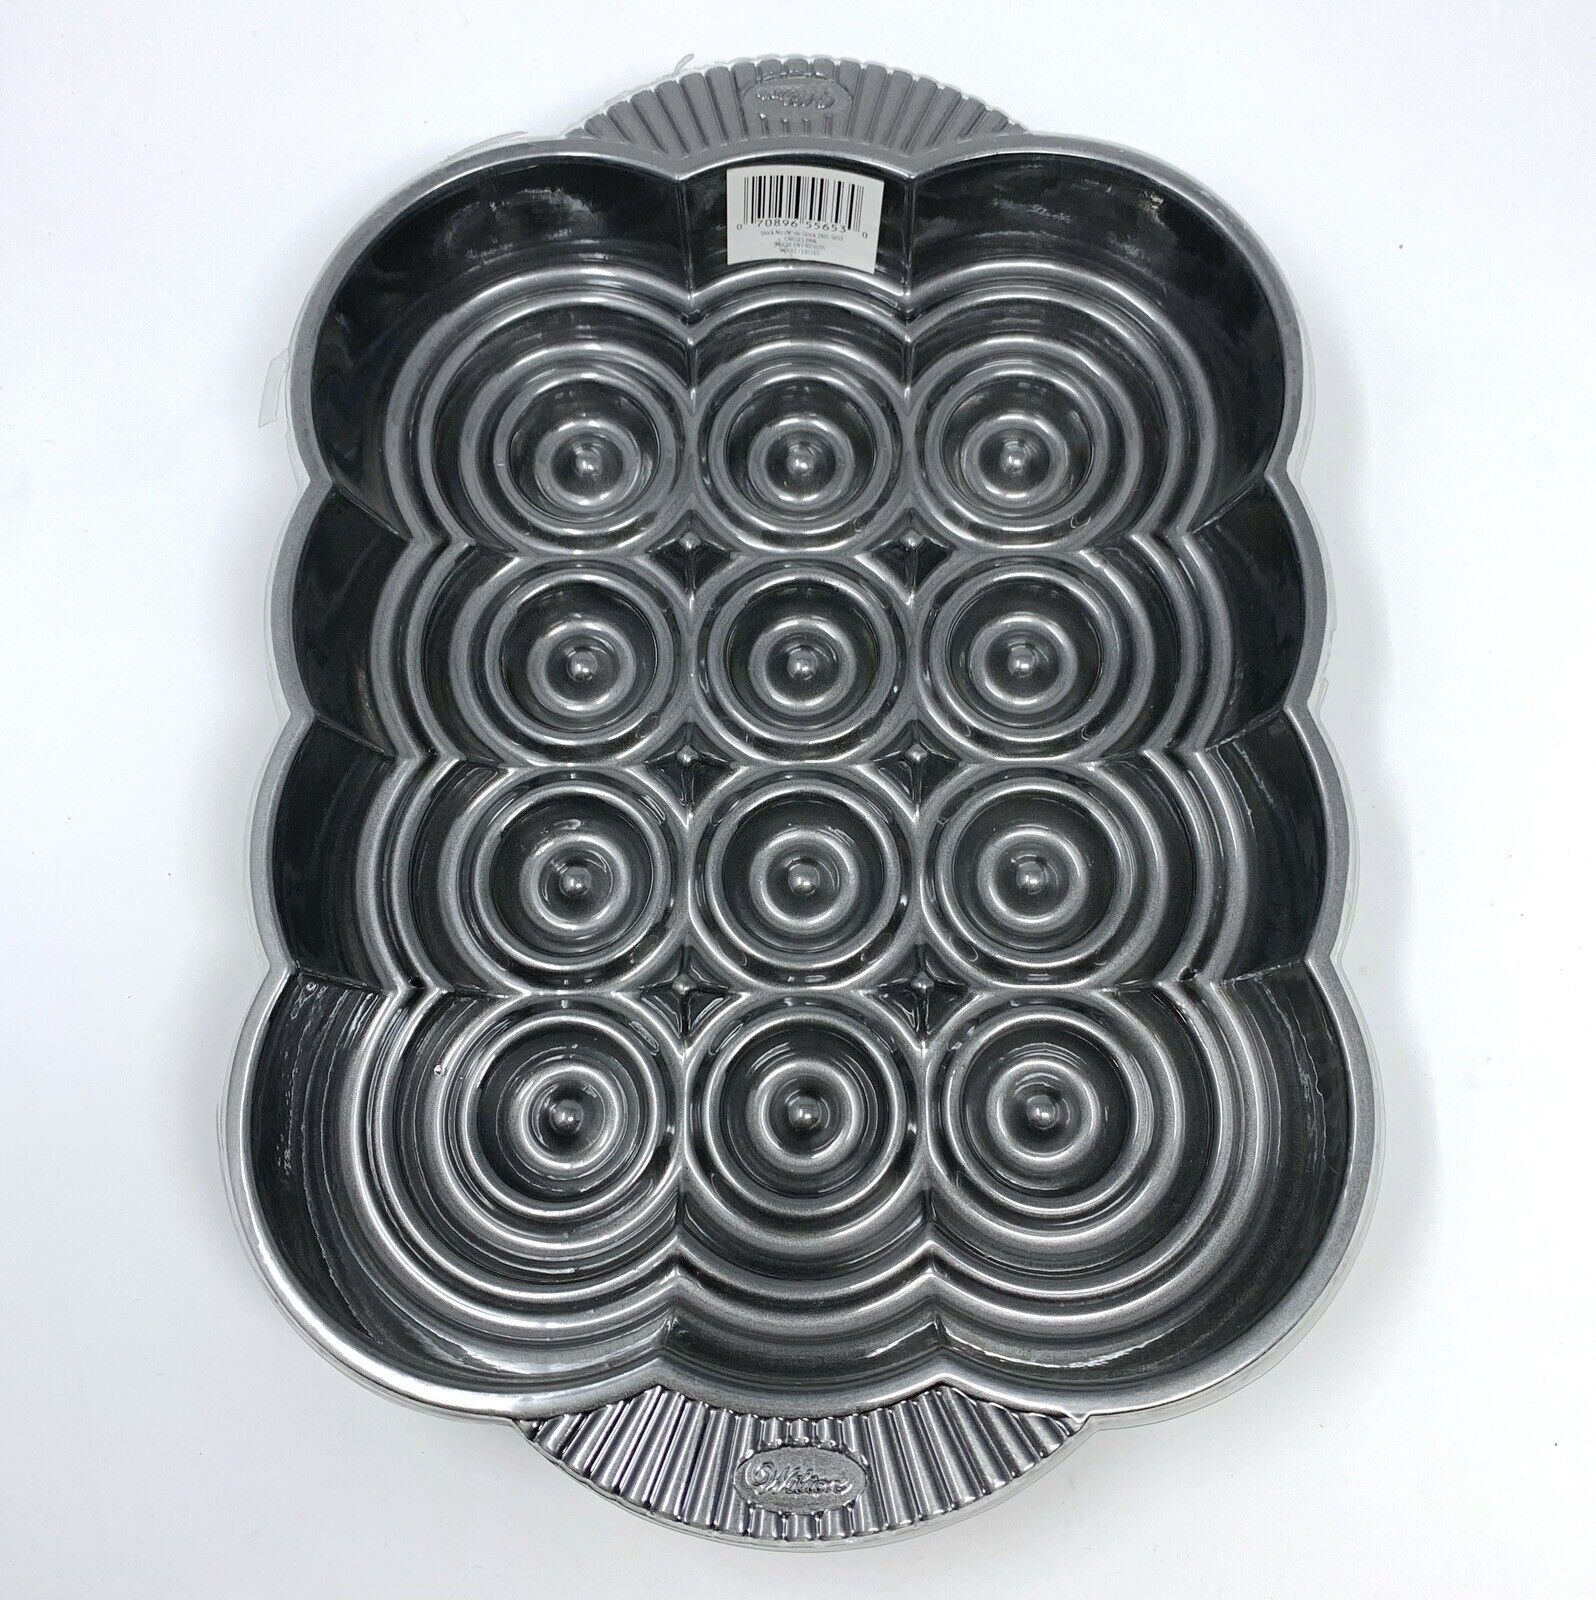 WILTON Dimensions Cast Aluminum Decorative Circles Pan 10 Cup Rectangular